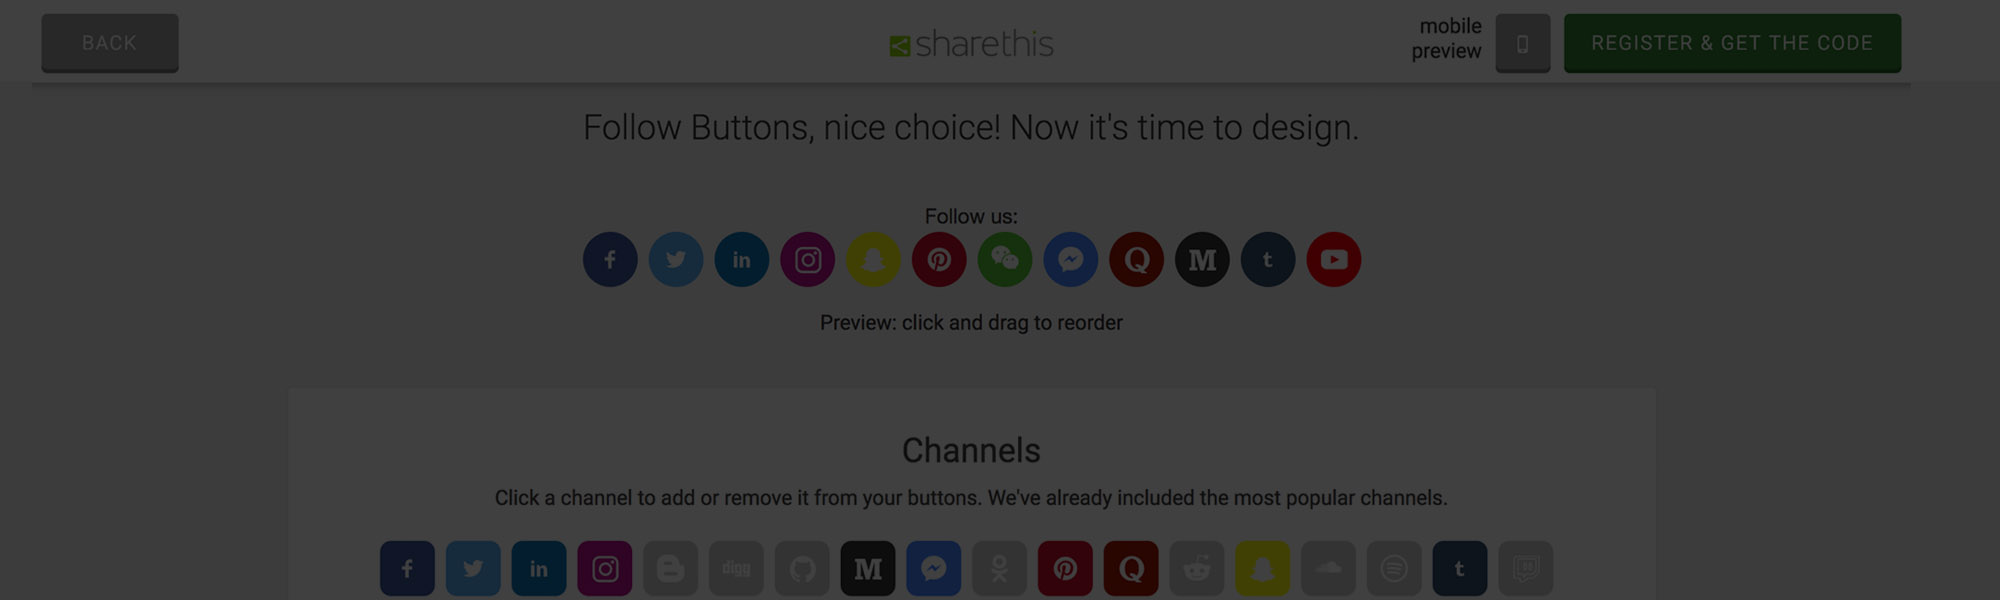 正在推出 ShareThis 分享按鈕 :美觀,安裝快,配置方便